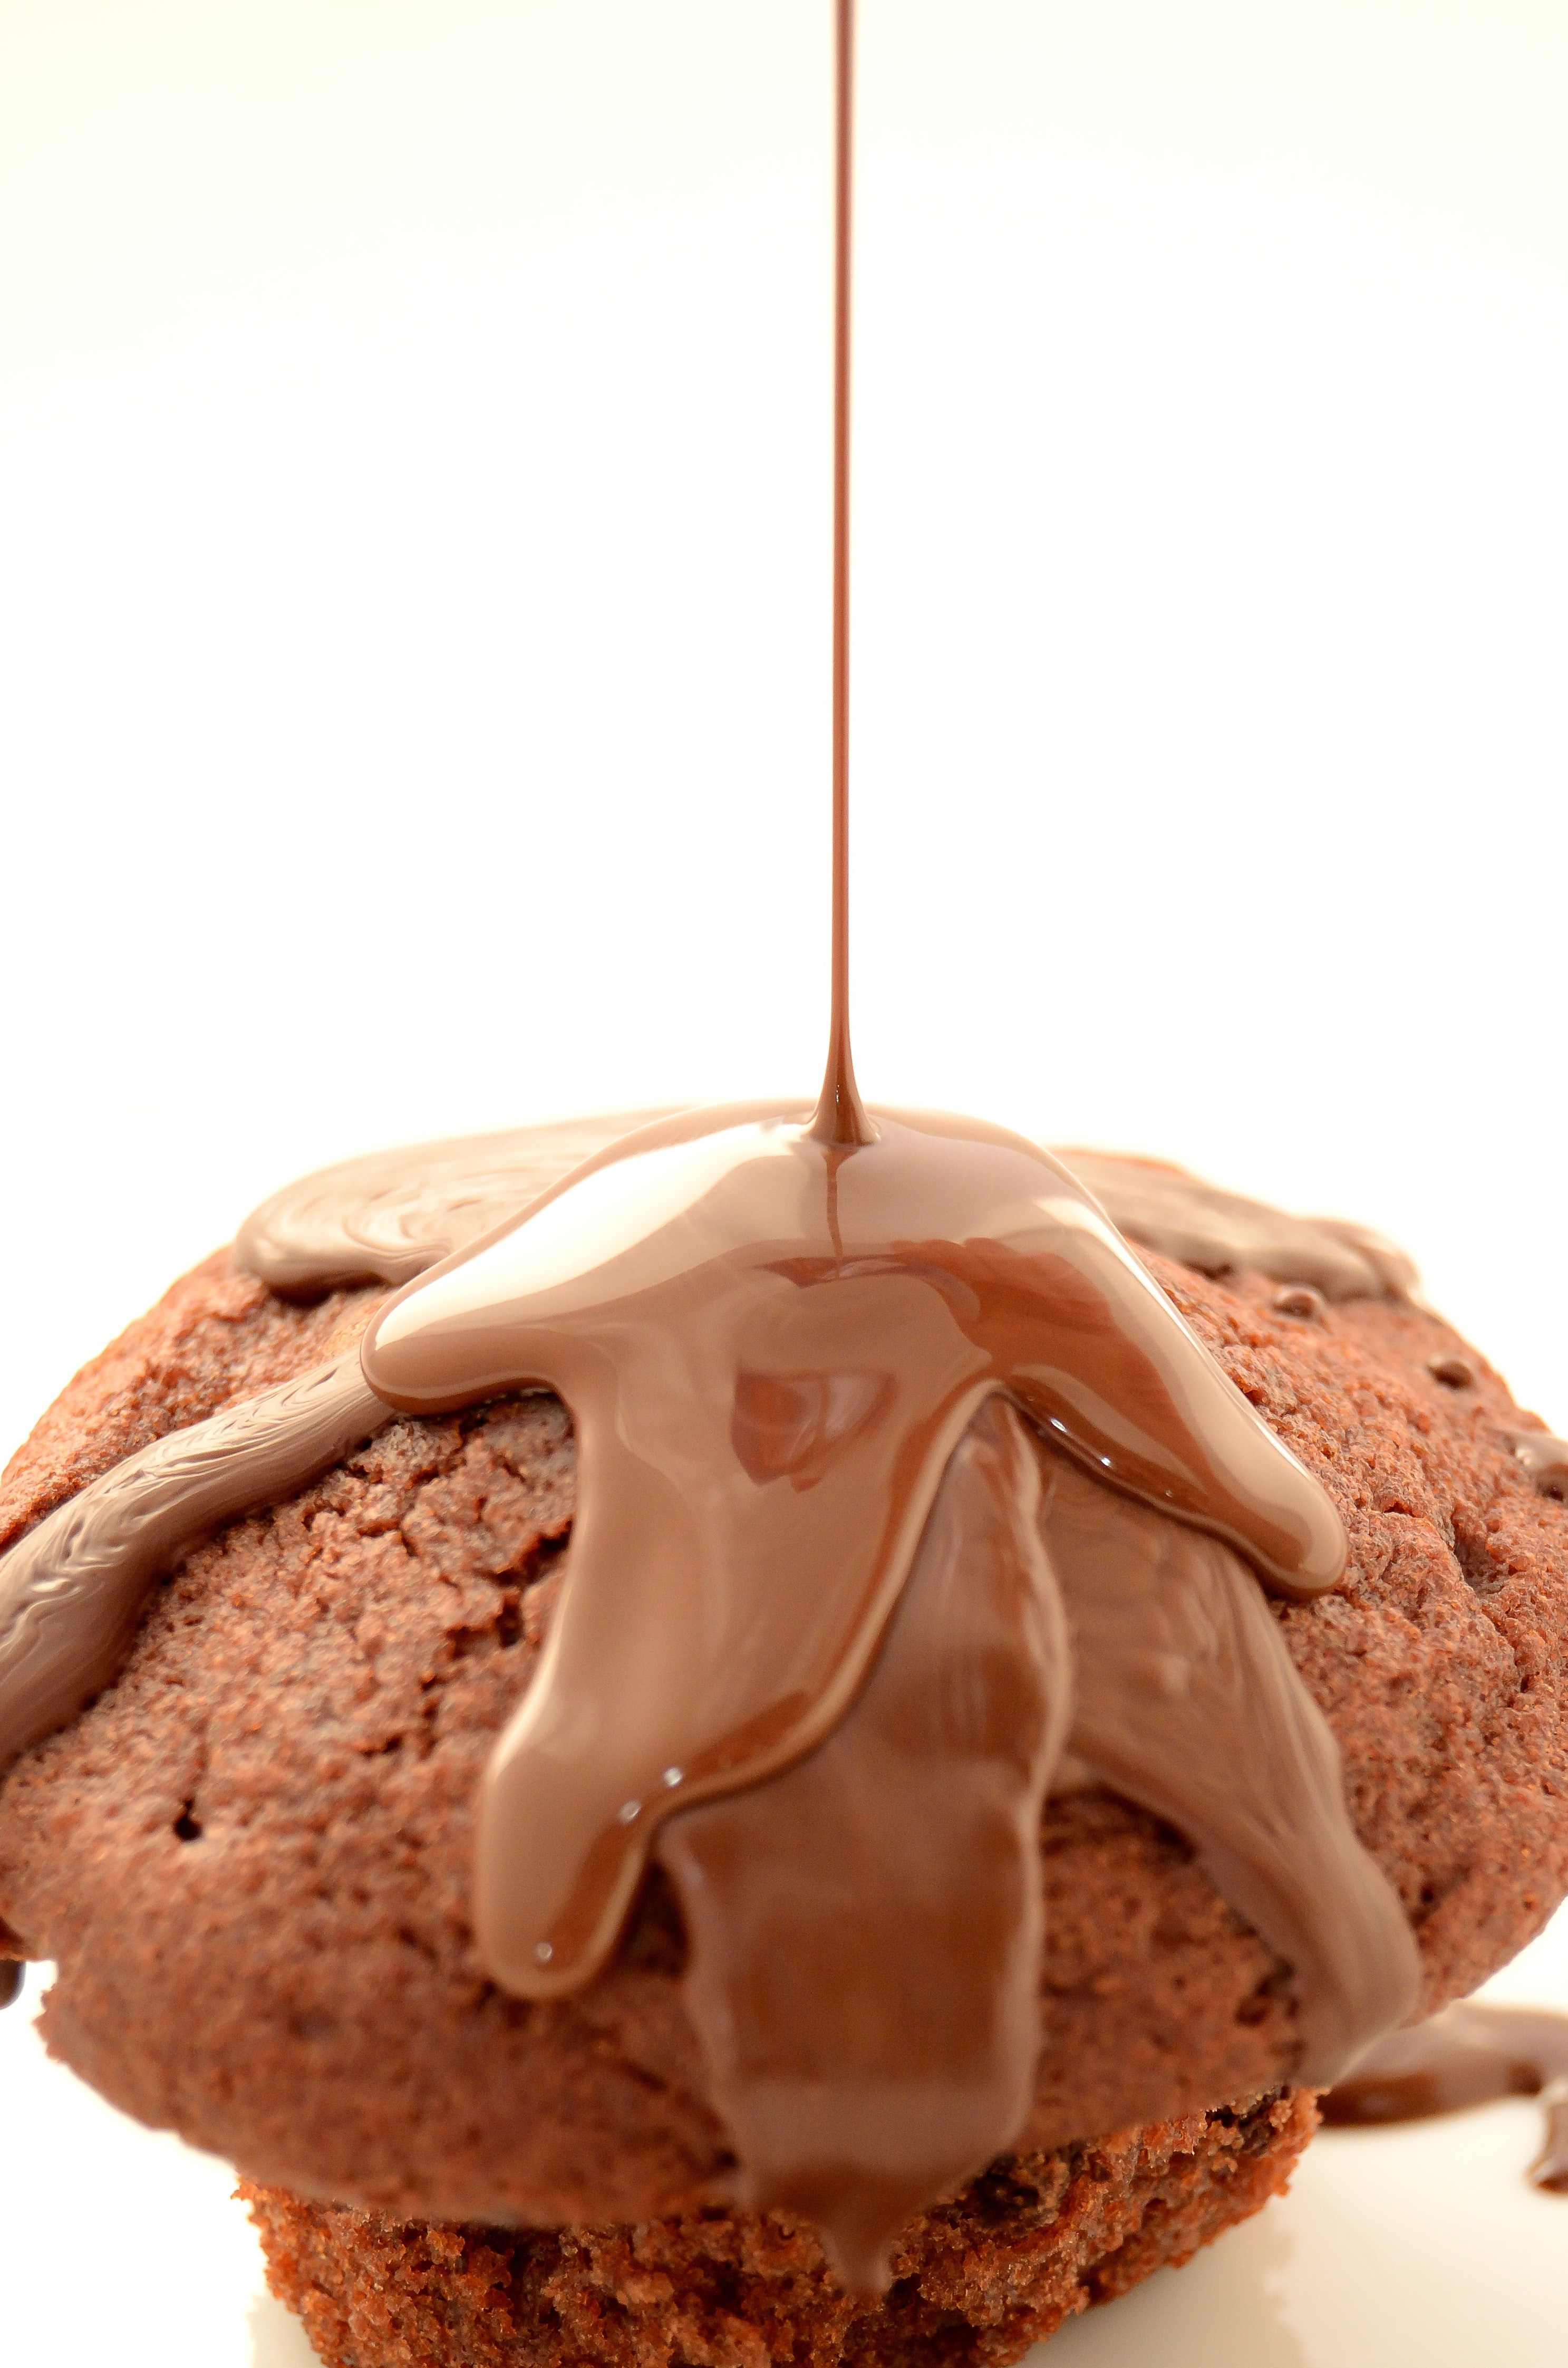 chocolate cupcake top with chocolate syrup